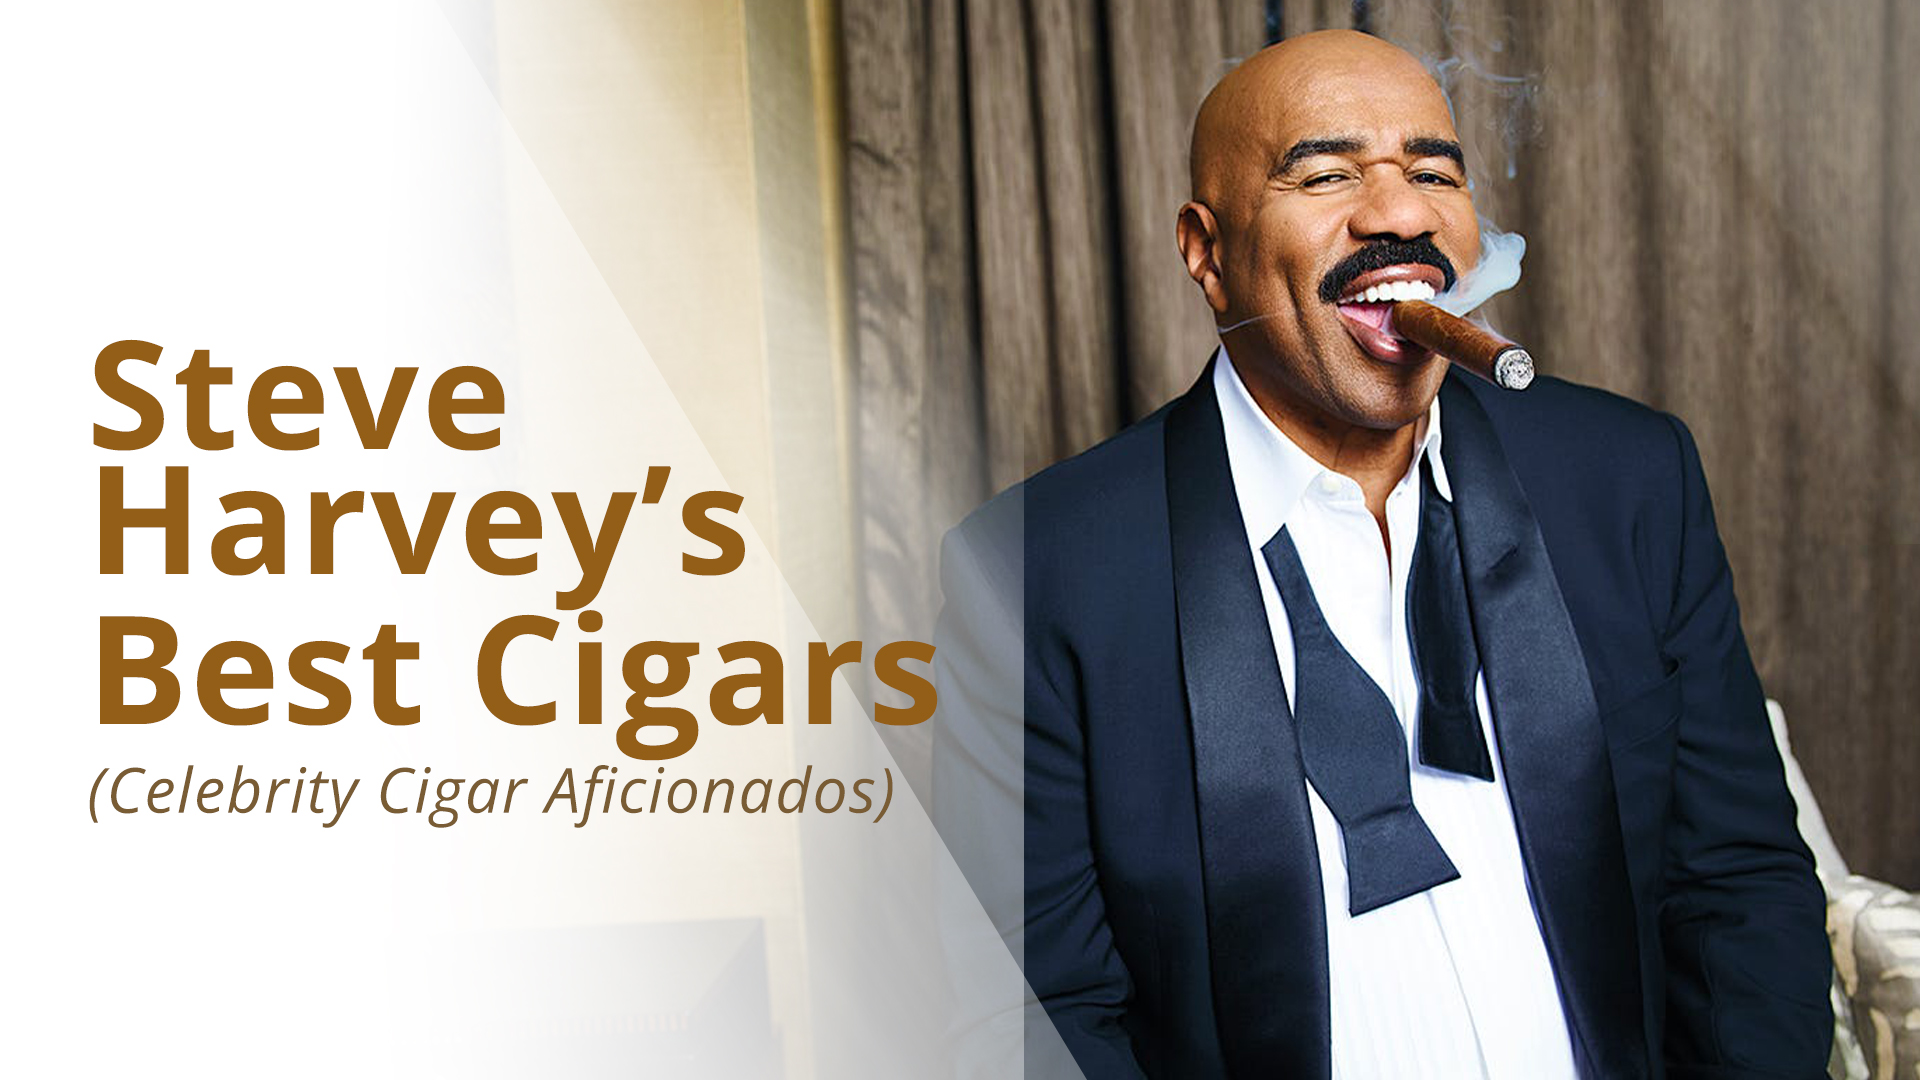 What cigars does Steve Harvey smoke